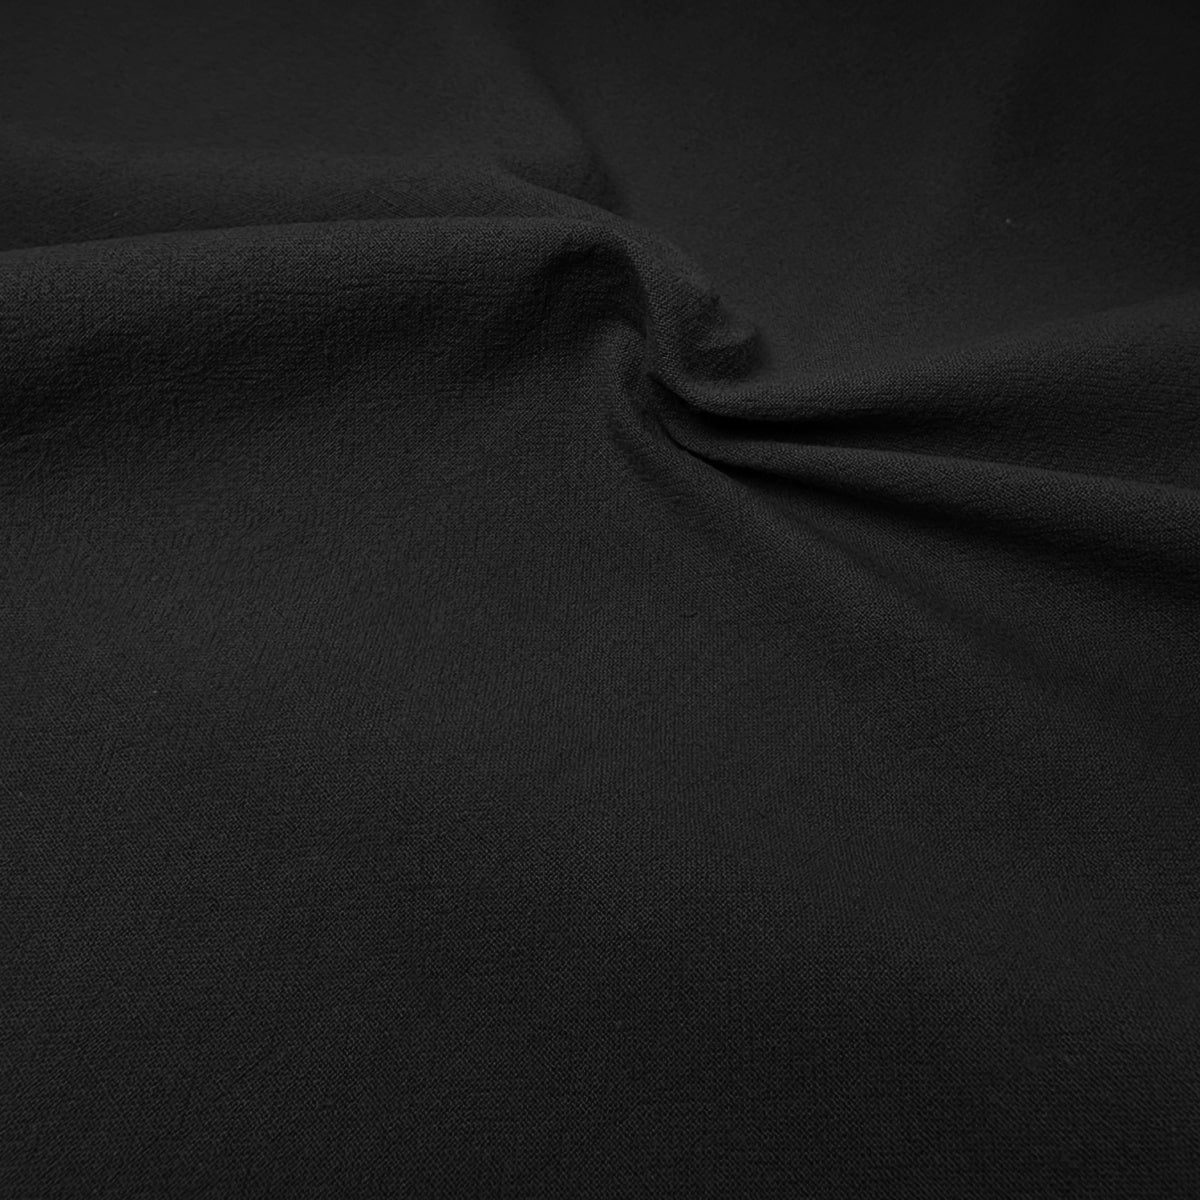 Crumple Cotton Fabric | Black